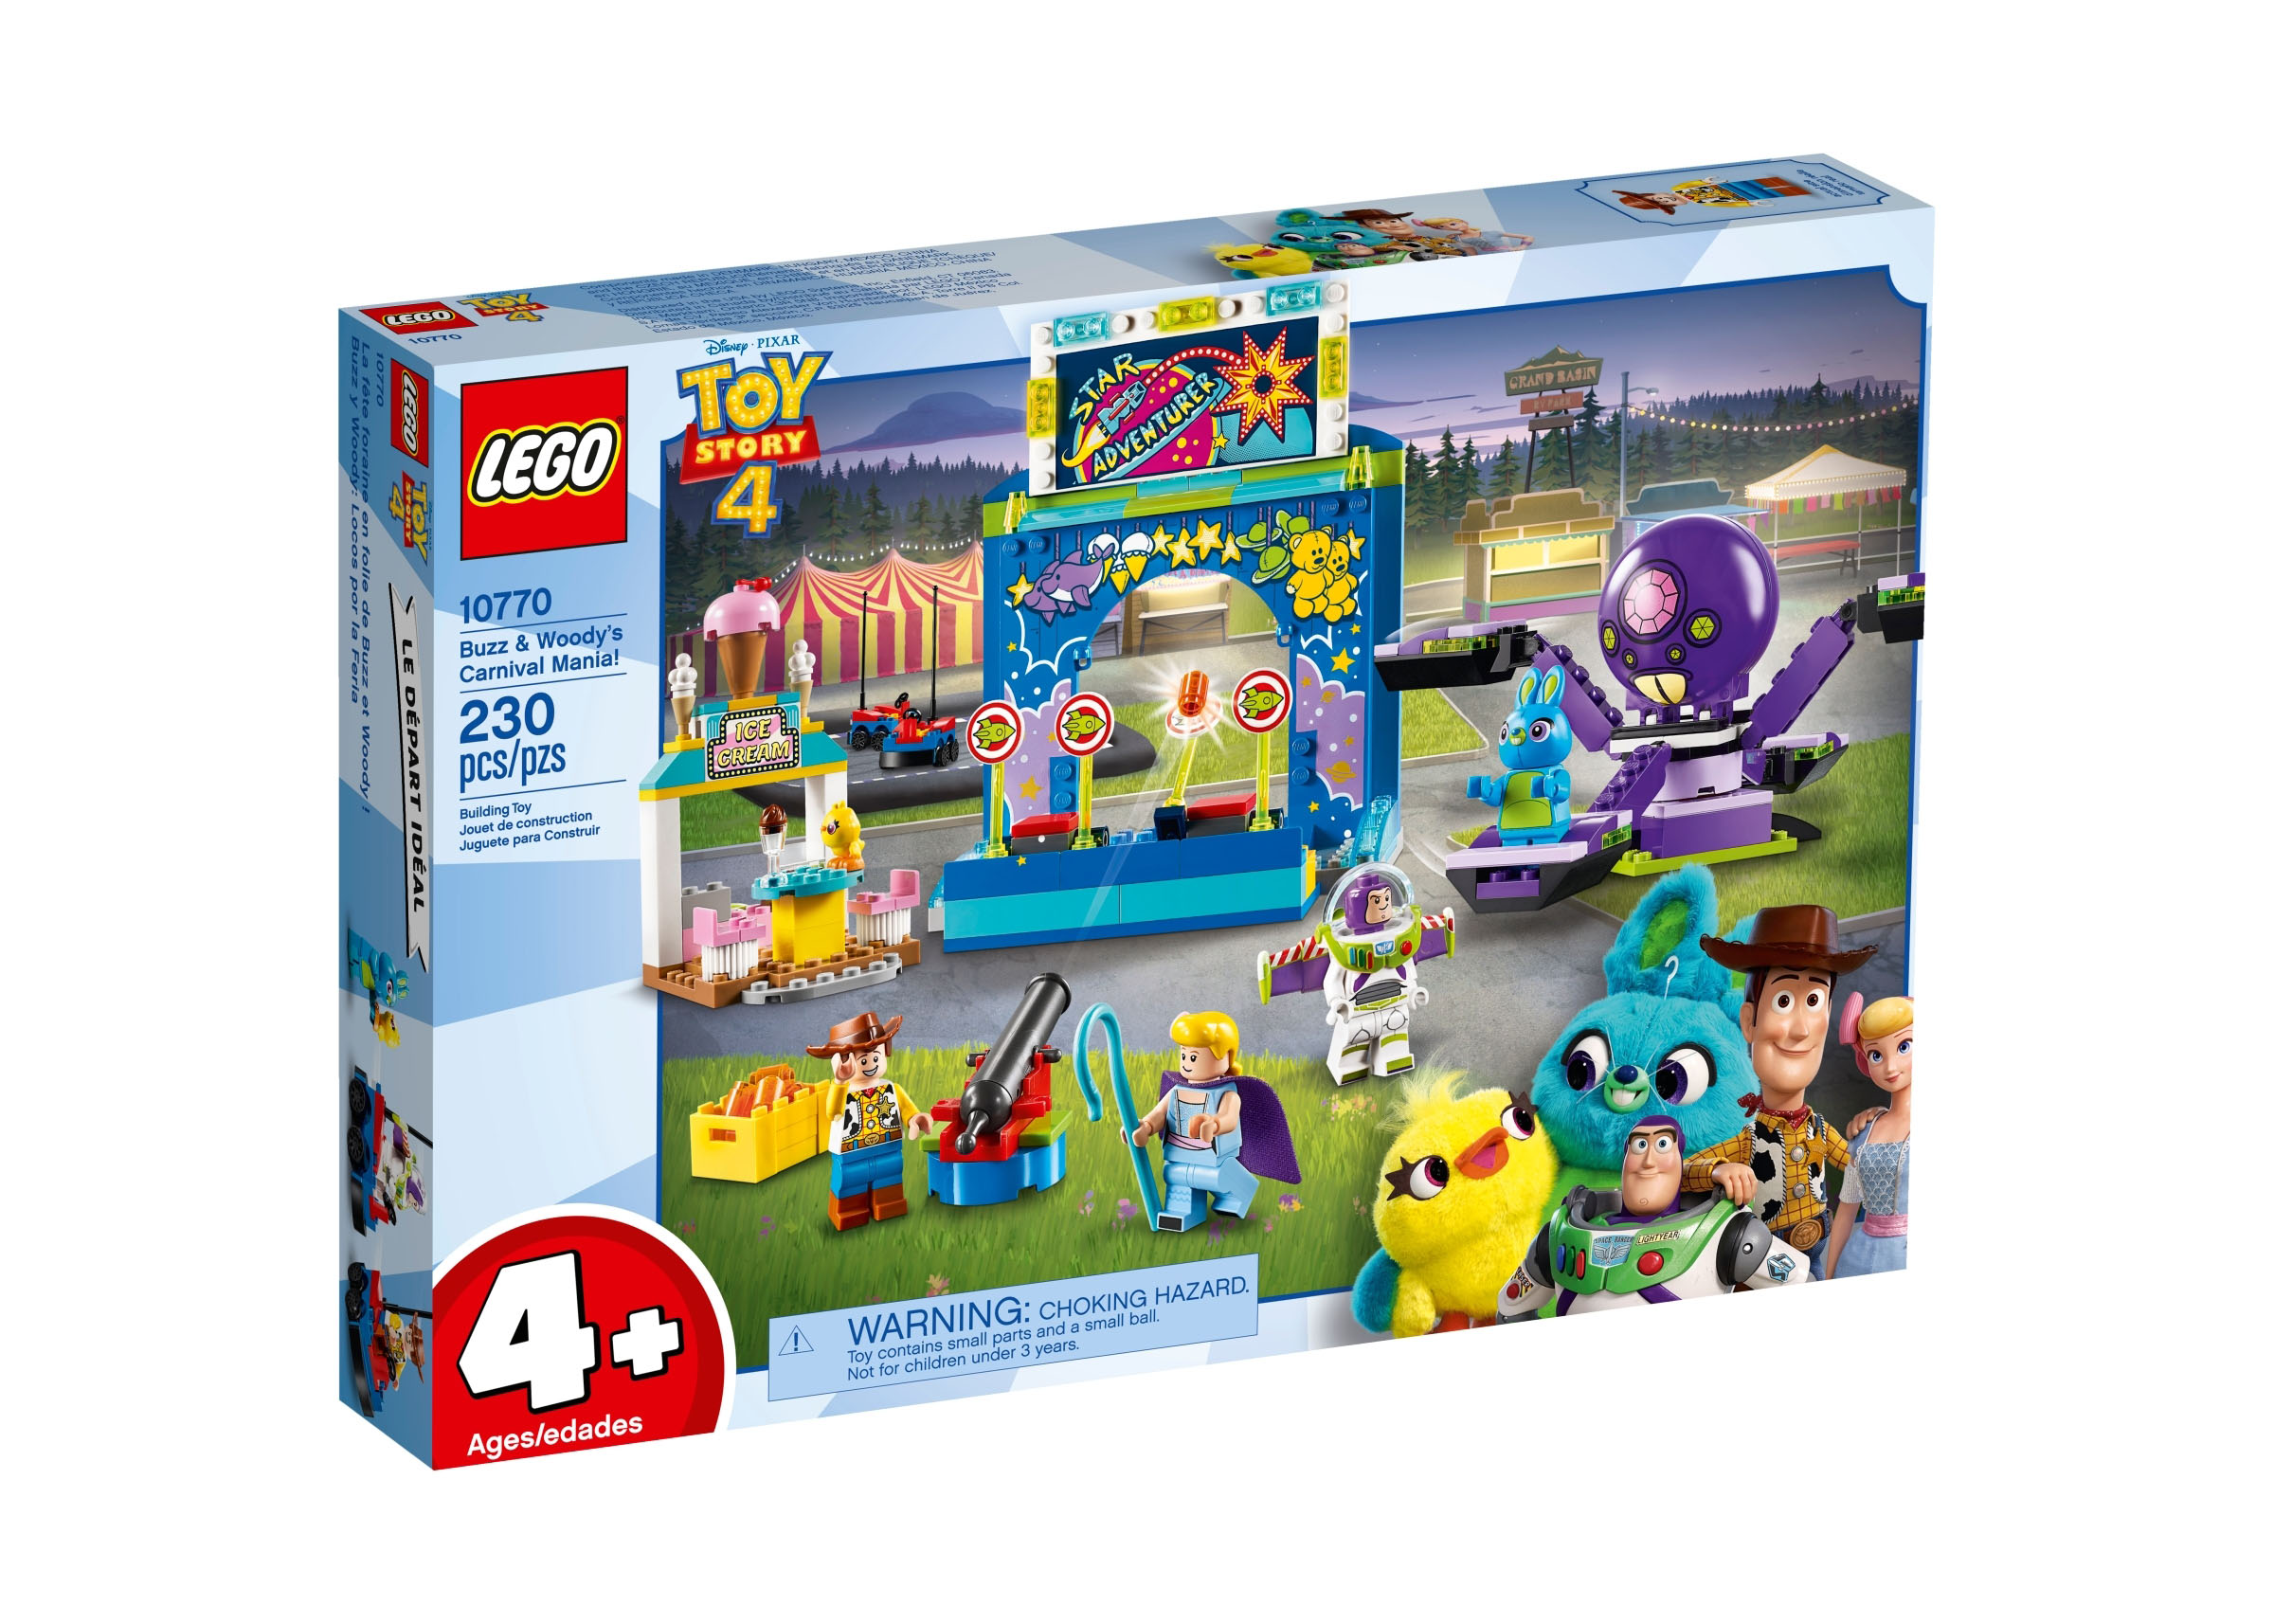 LEGO Toy Story Buzz & Woody's Carnival Mania! Set 10770